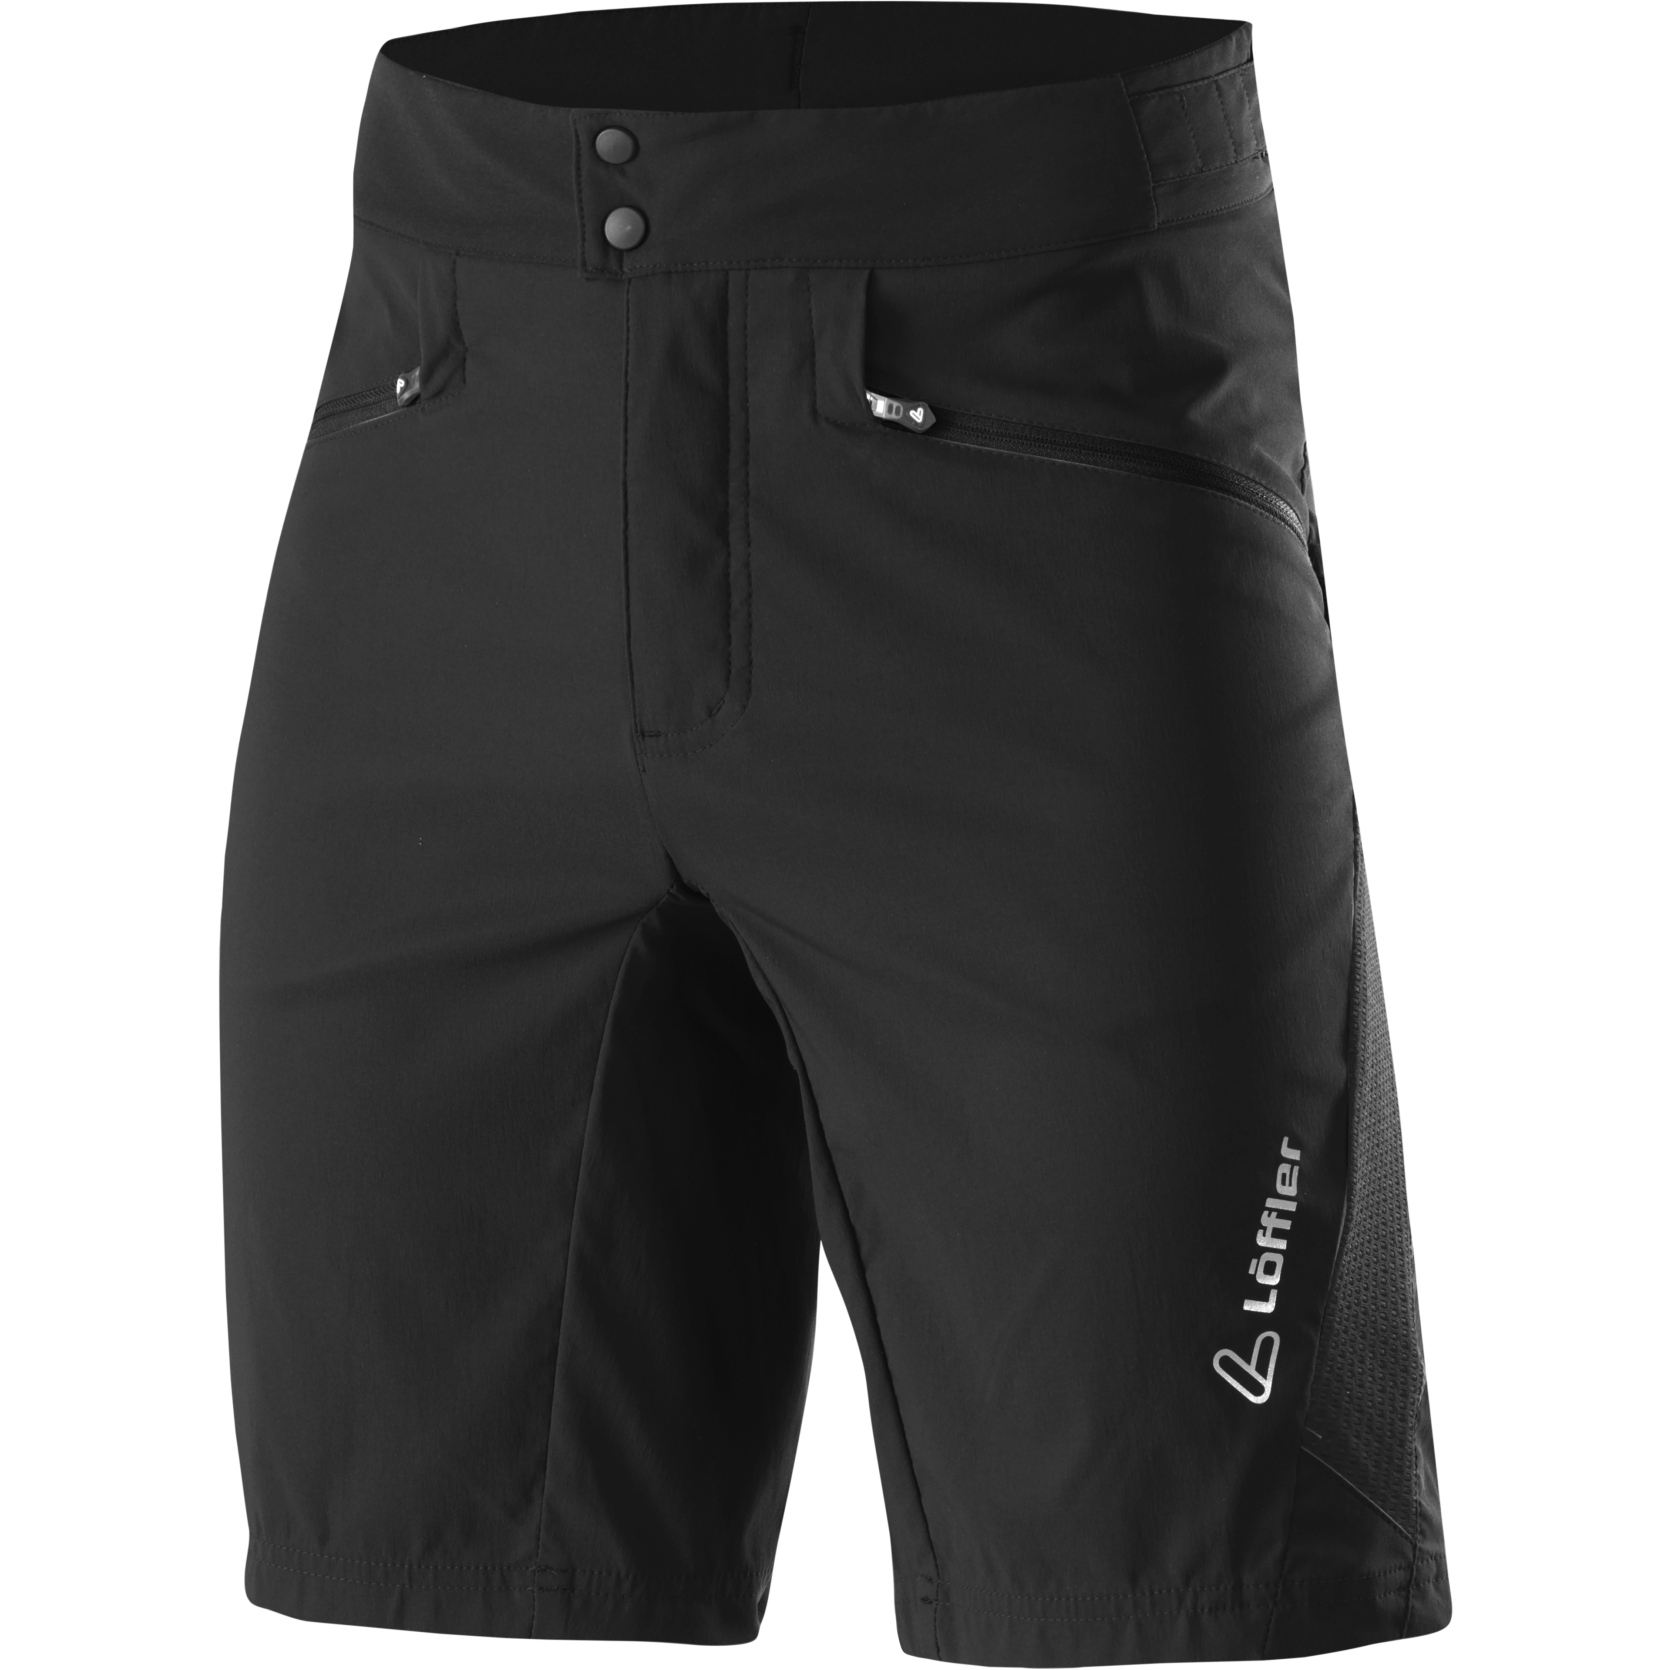 Image of Löffler Swift-G CSL Bike Shorts Men - black 990